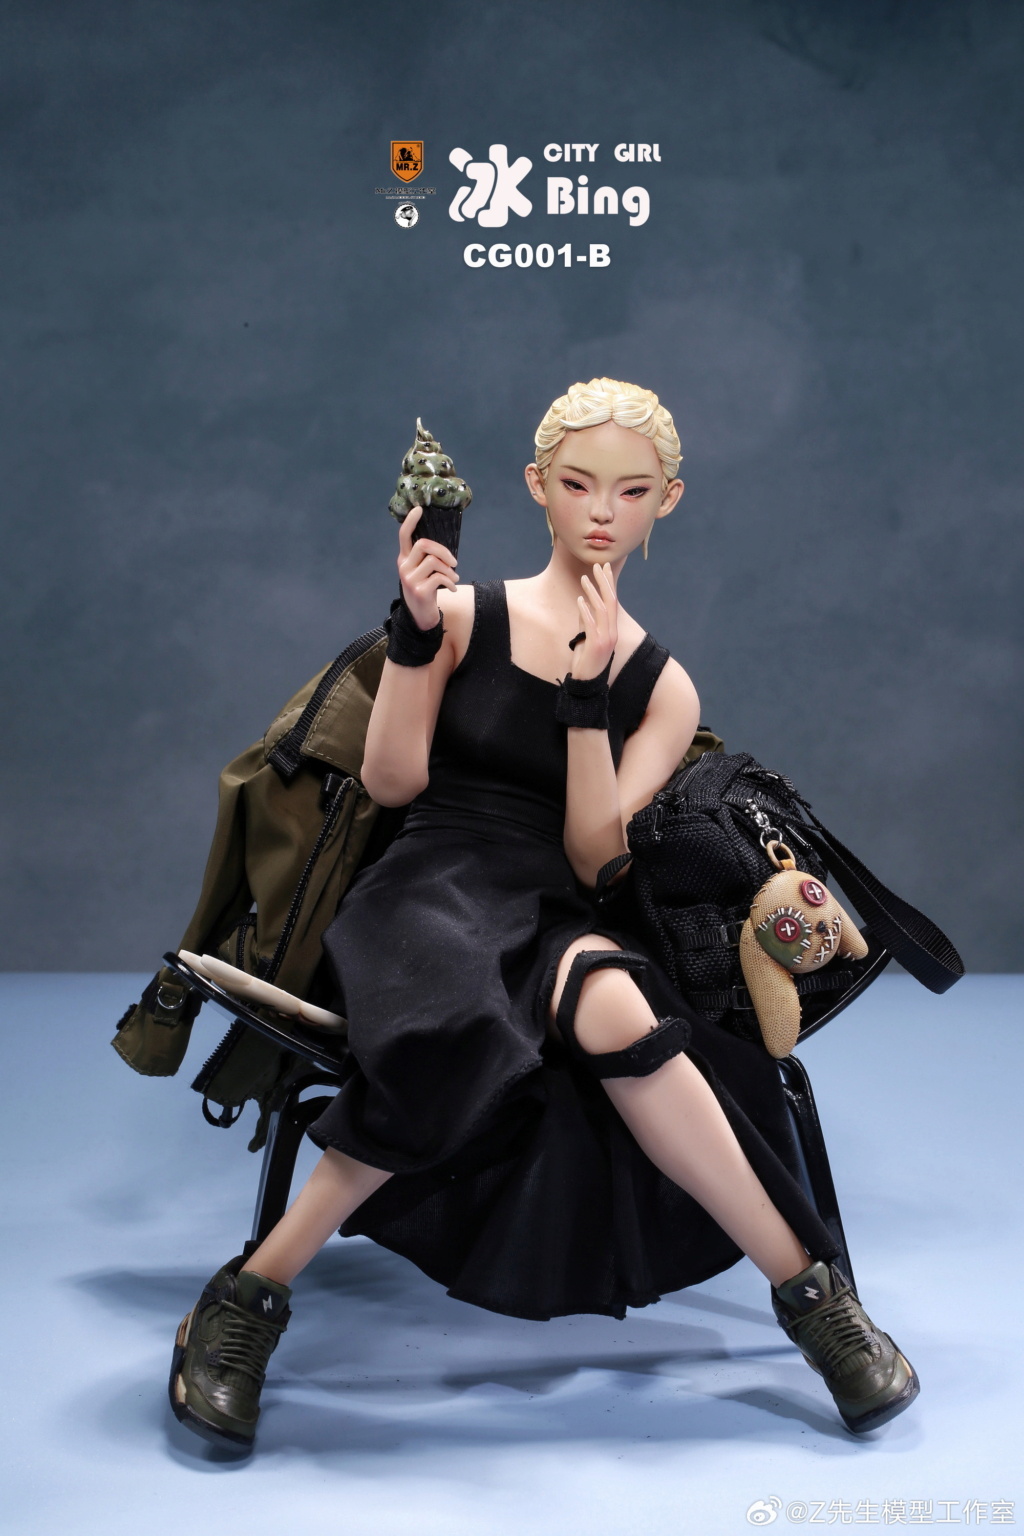 female - NEW PRODUCT: Mr.Z model studio - city series first urban girl Mu & Bing #CG001-A/B 6b270b29